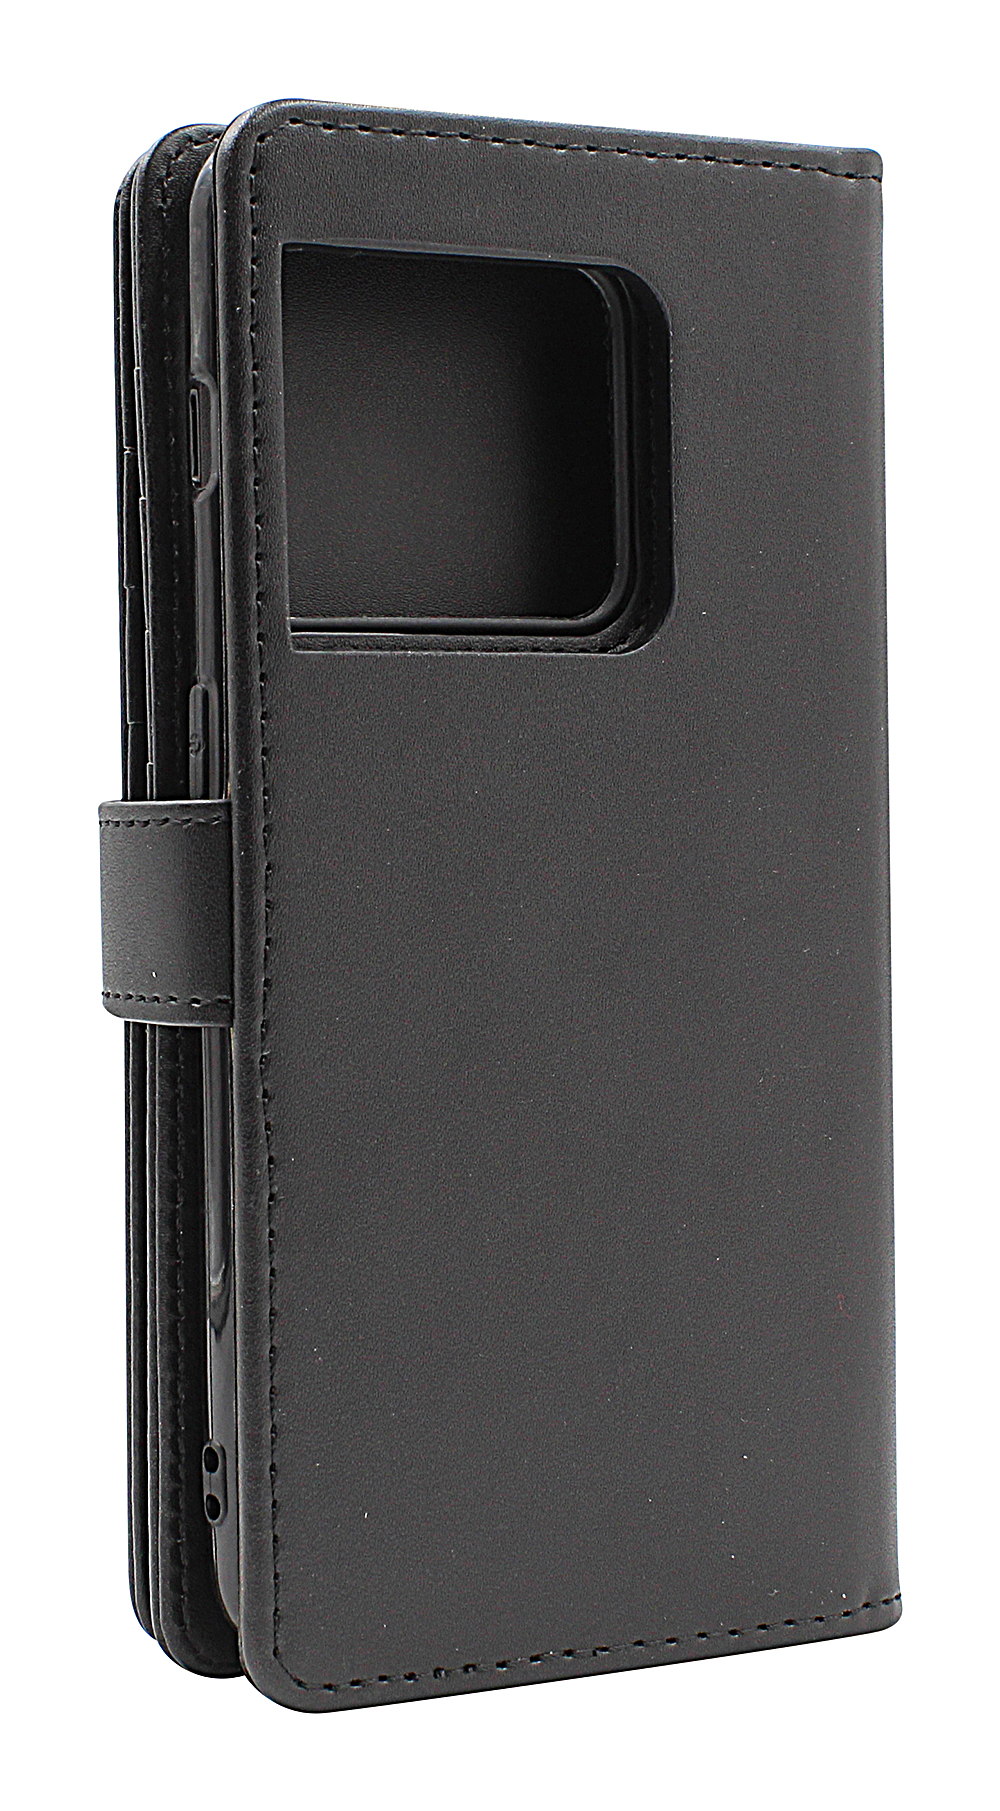 CoverInSkimblocker XL Magnet Fodral OnePlus 10 Pro